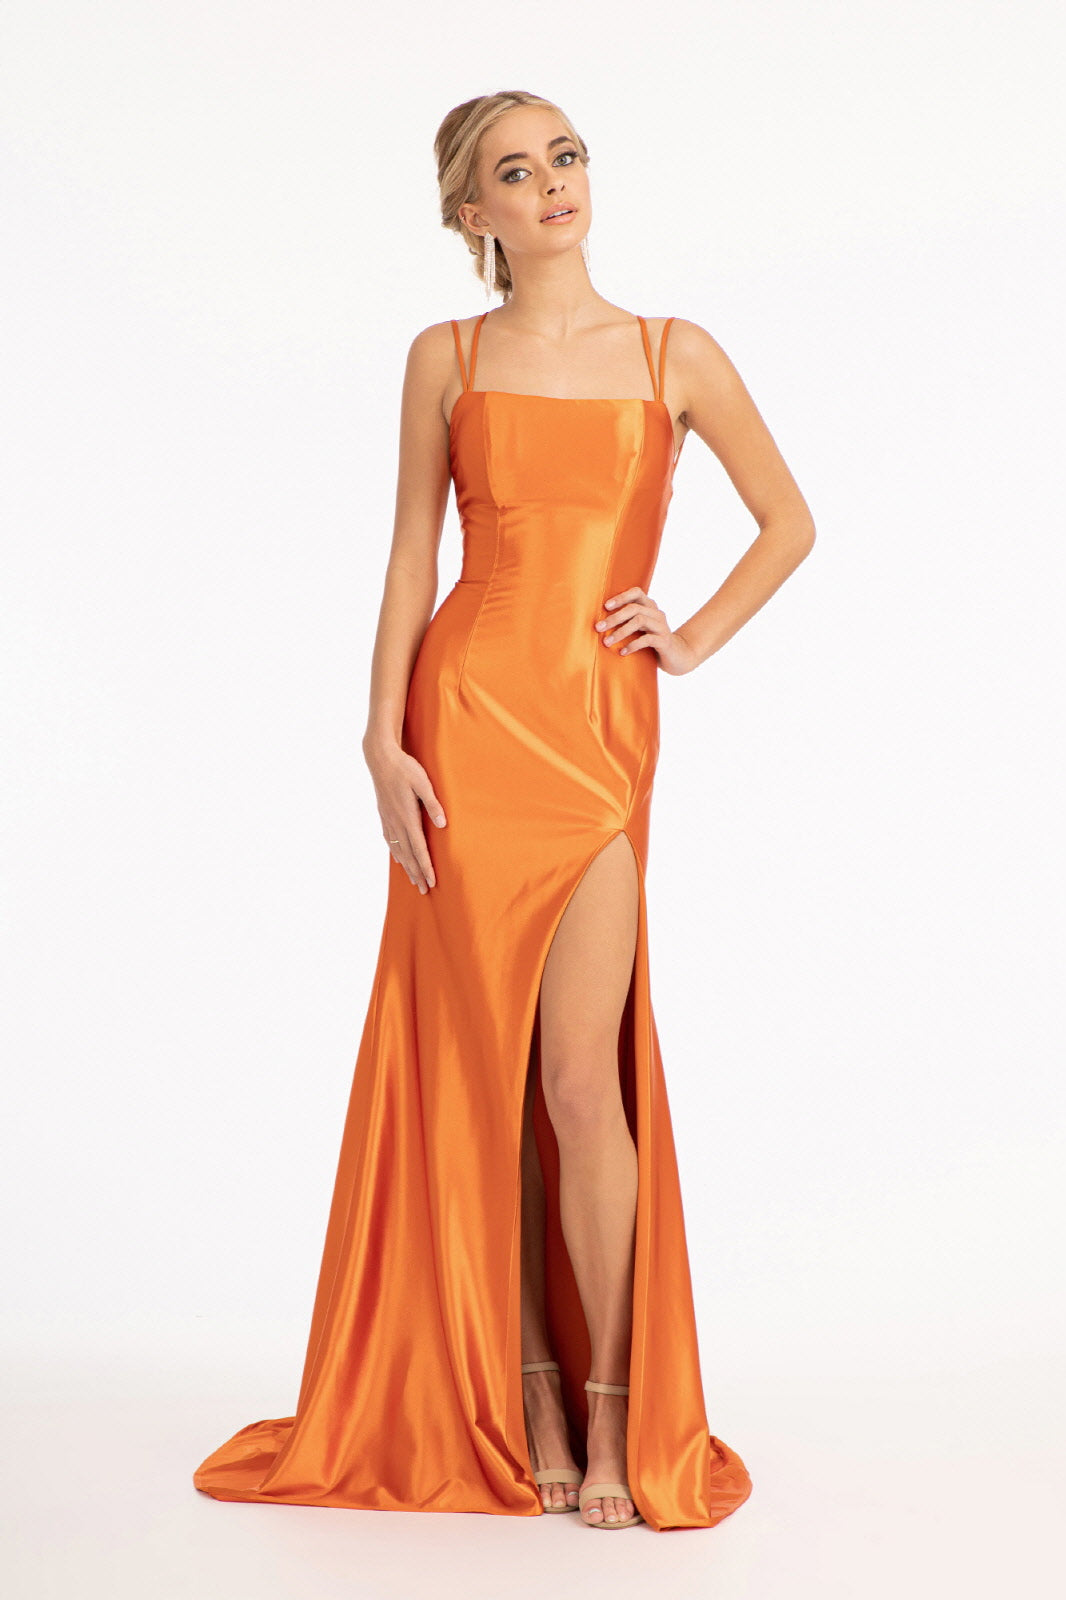 Fitted Long Shiny Satin Dress by Elizabeth K GL3061